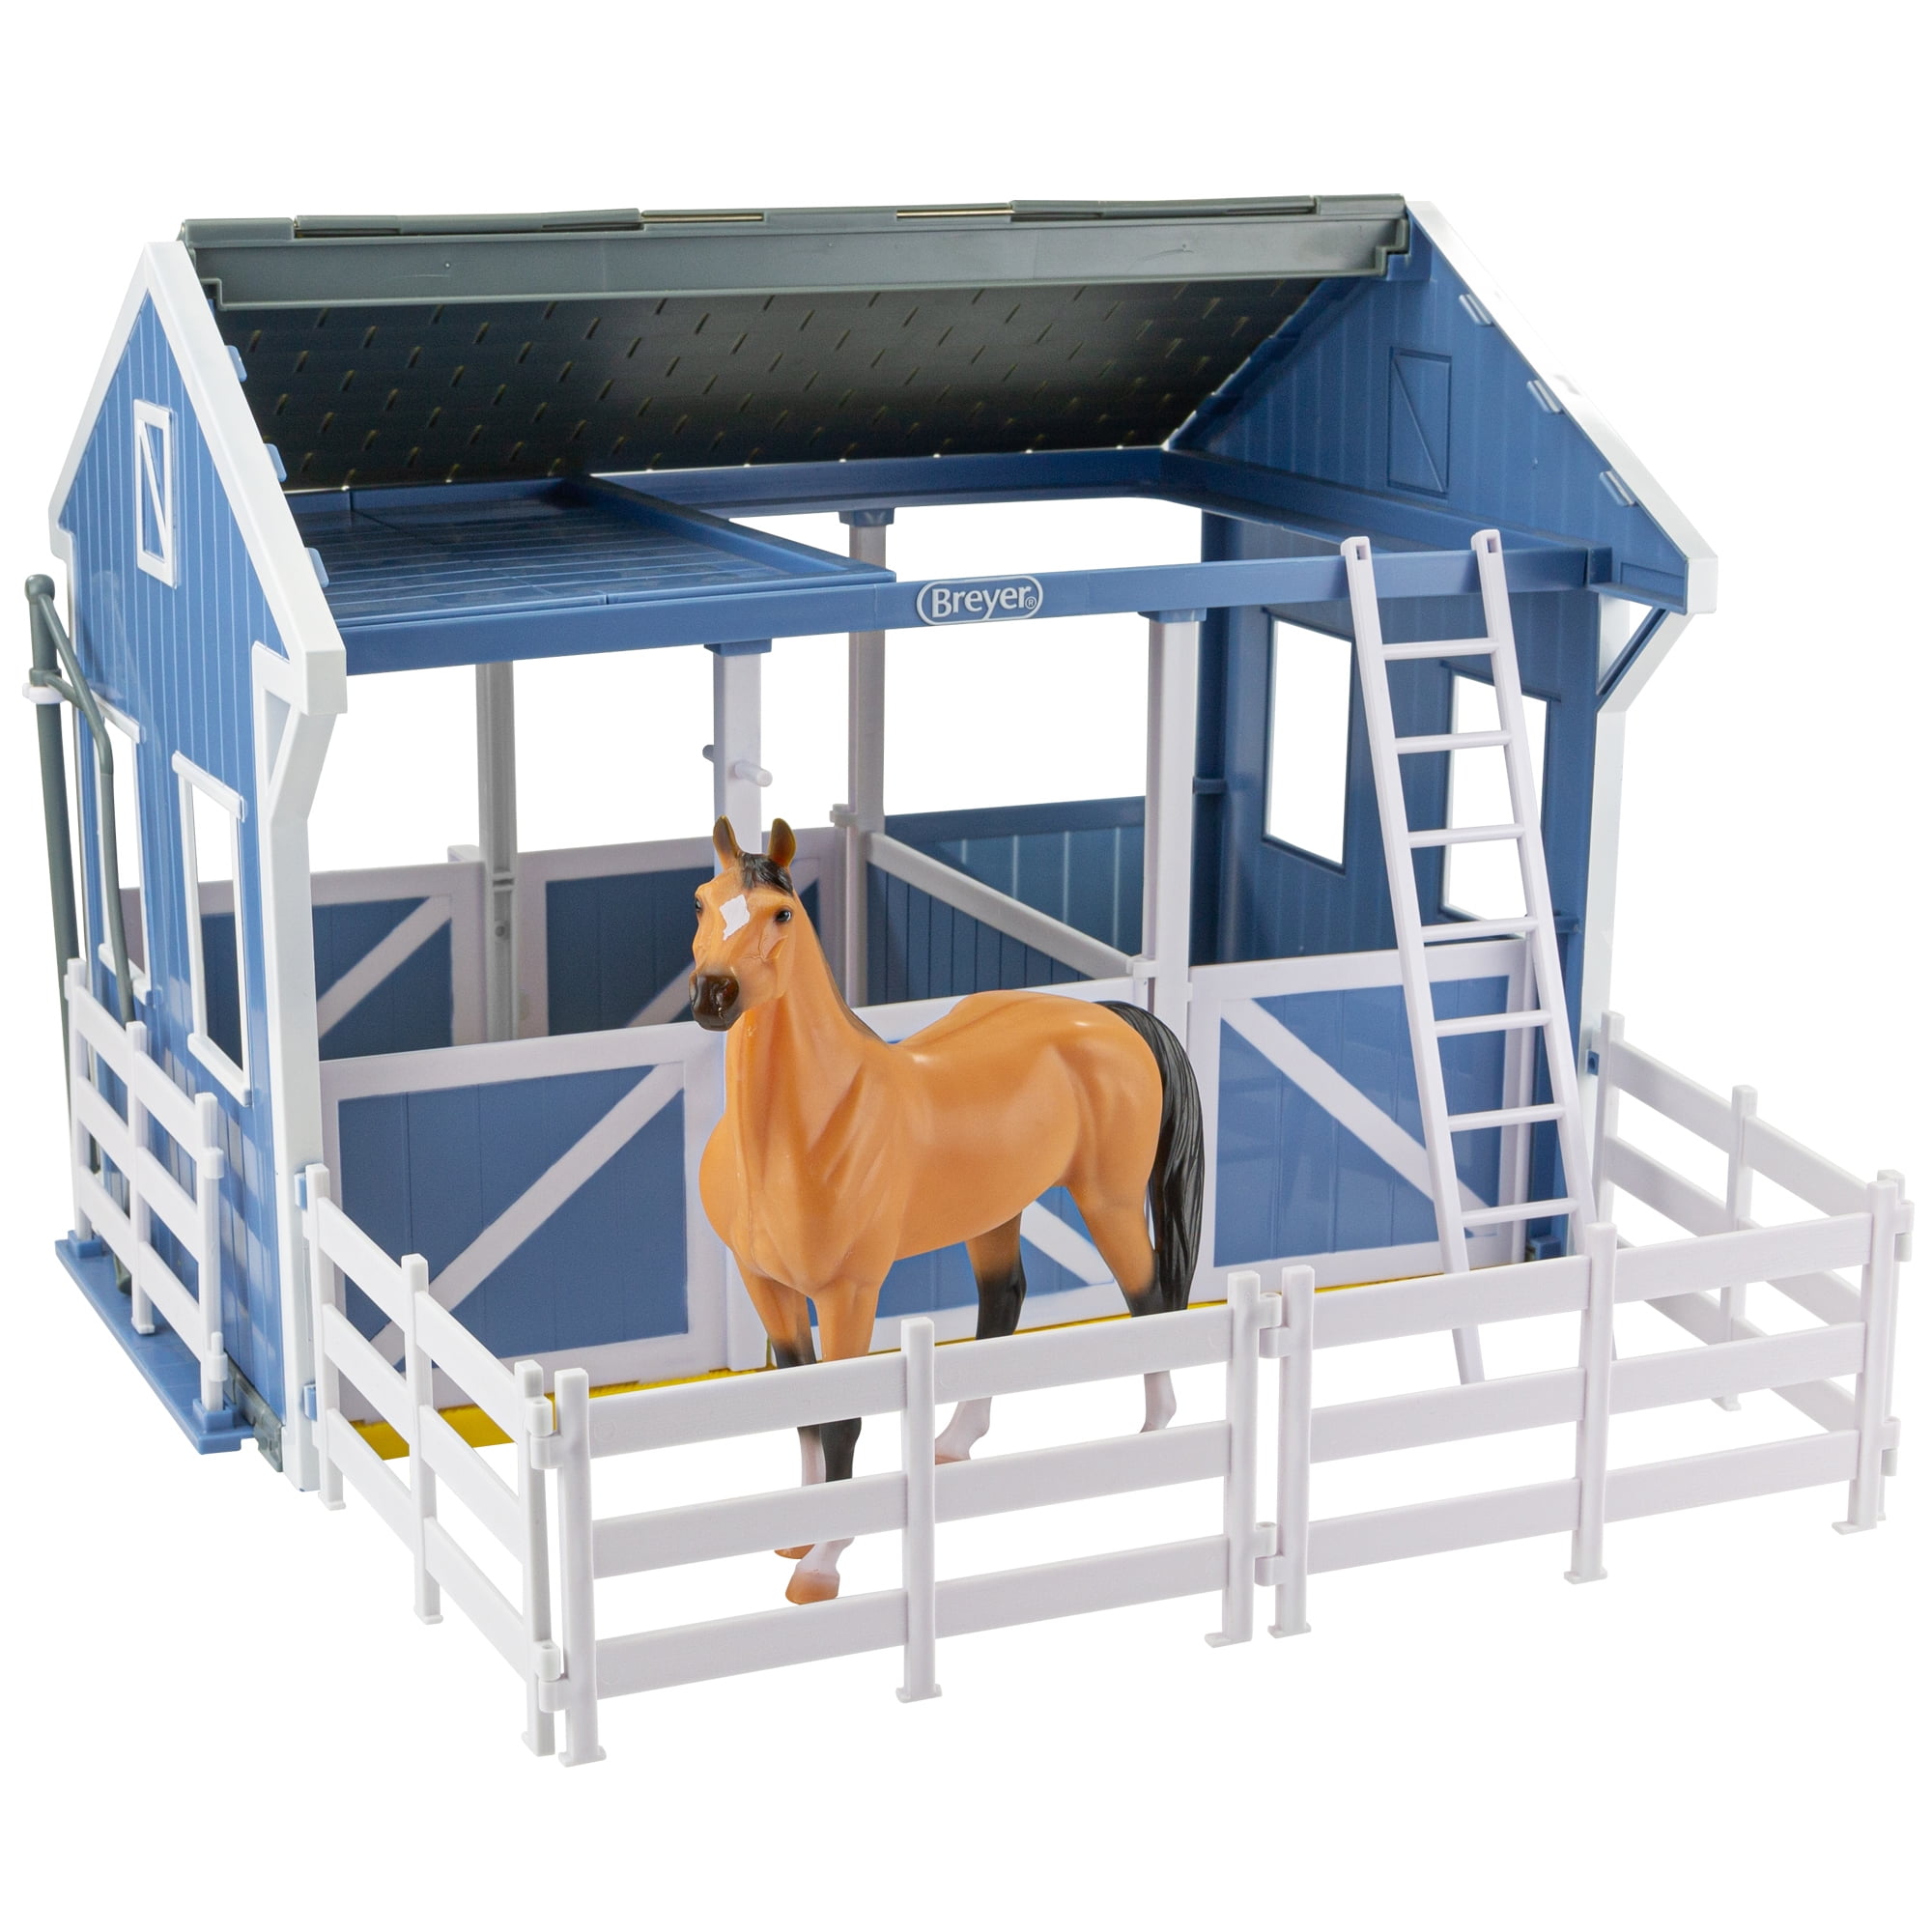 Breyer Horses Freedom Series Deluxe